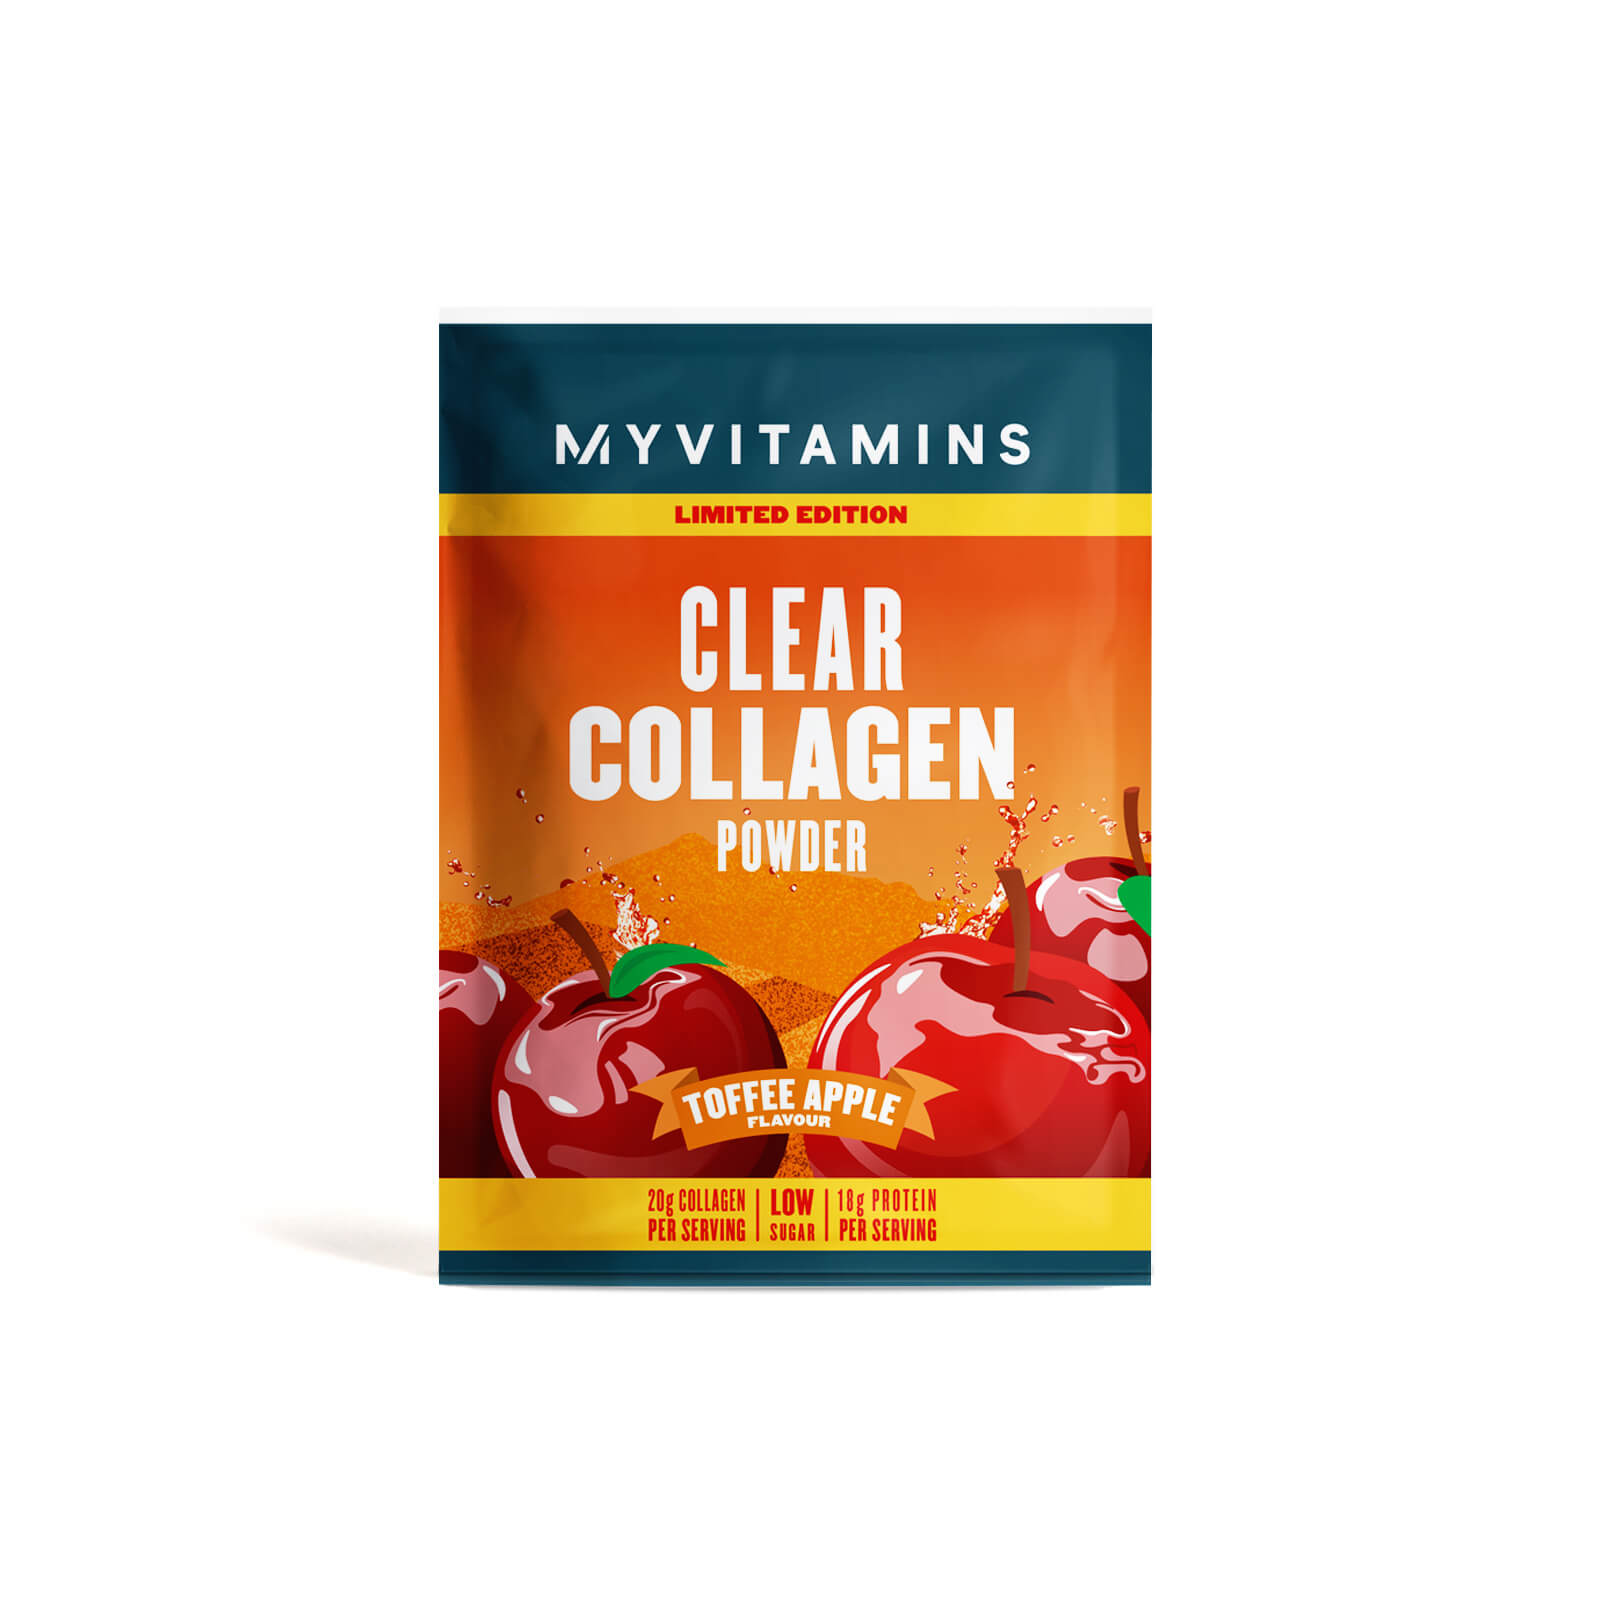 Collagen Powder (Sample) - 1servings - Toffee Apple